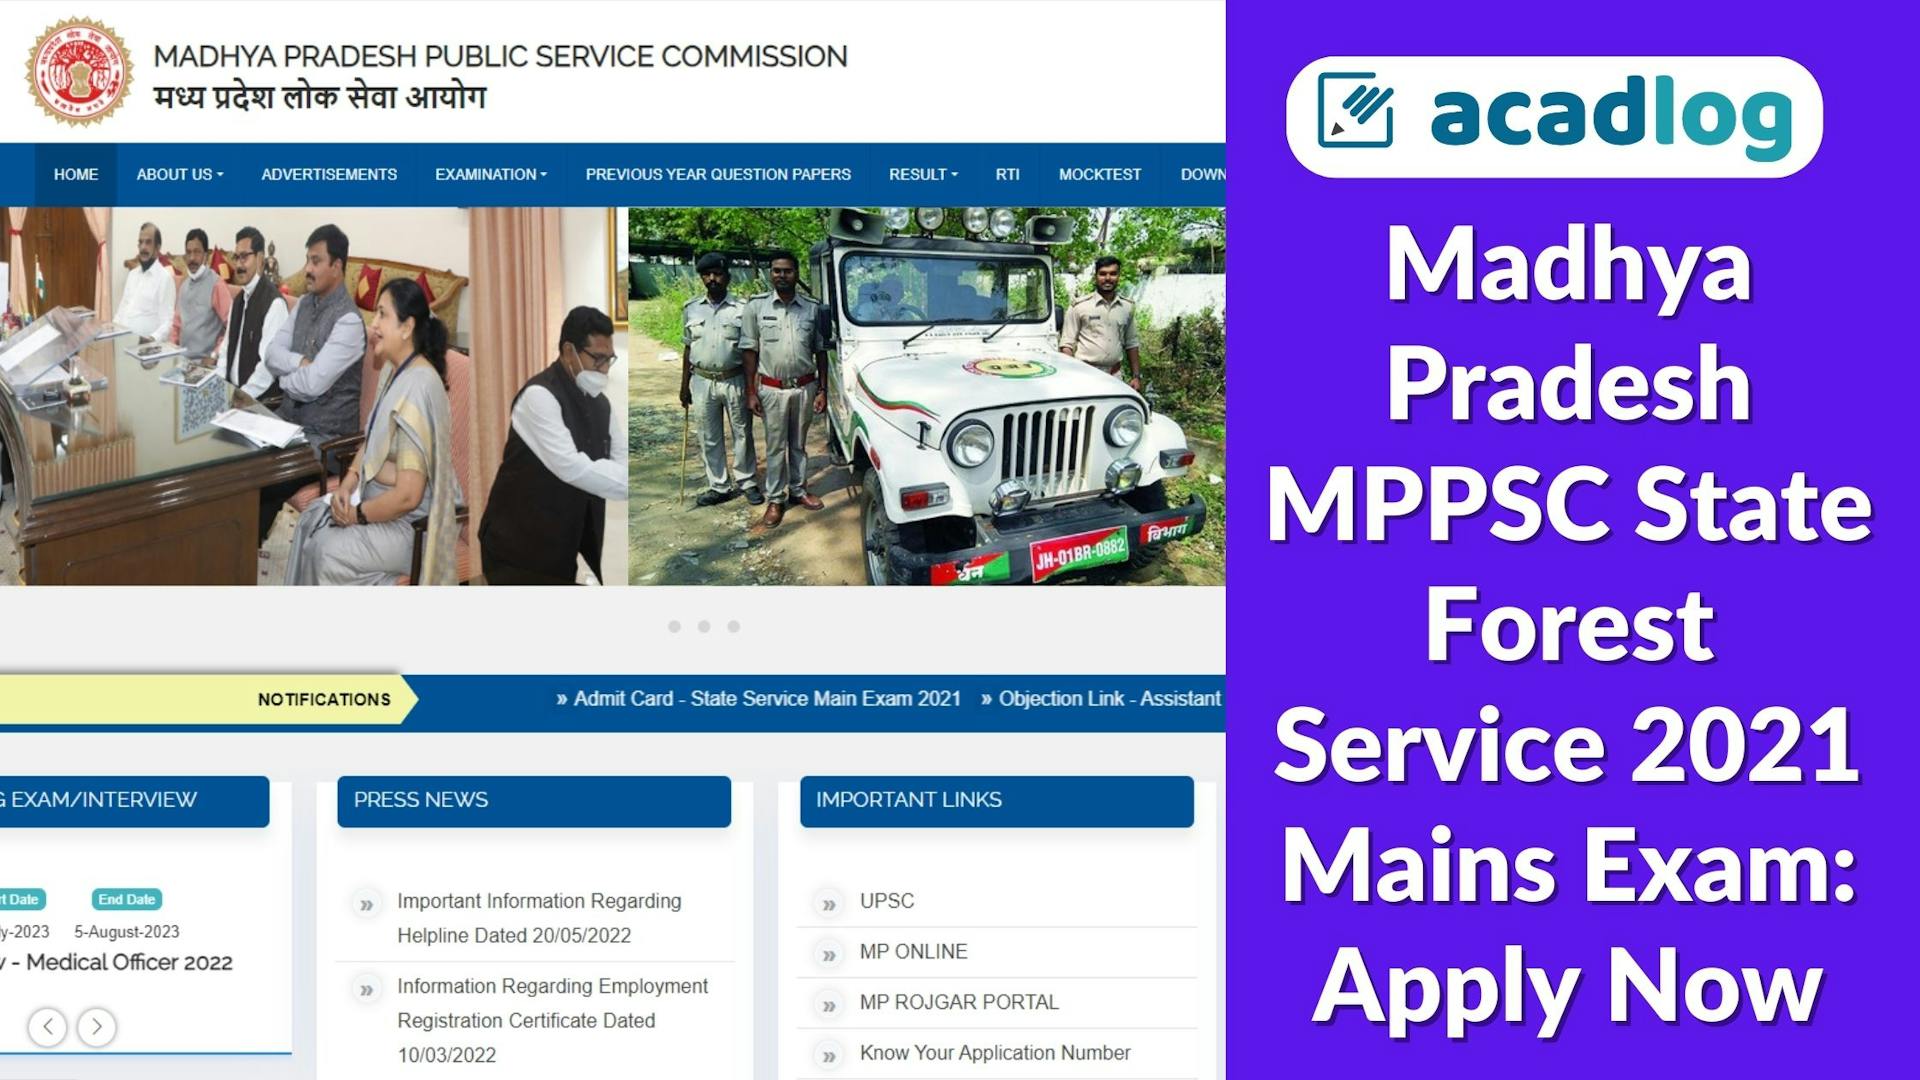 Madhya Pradesh MPPSC State Forest Service 2021 Mains Exam: Apply Now